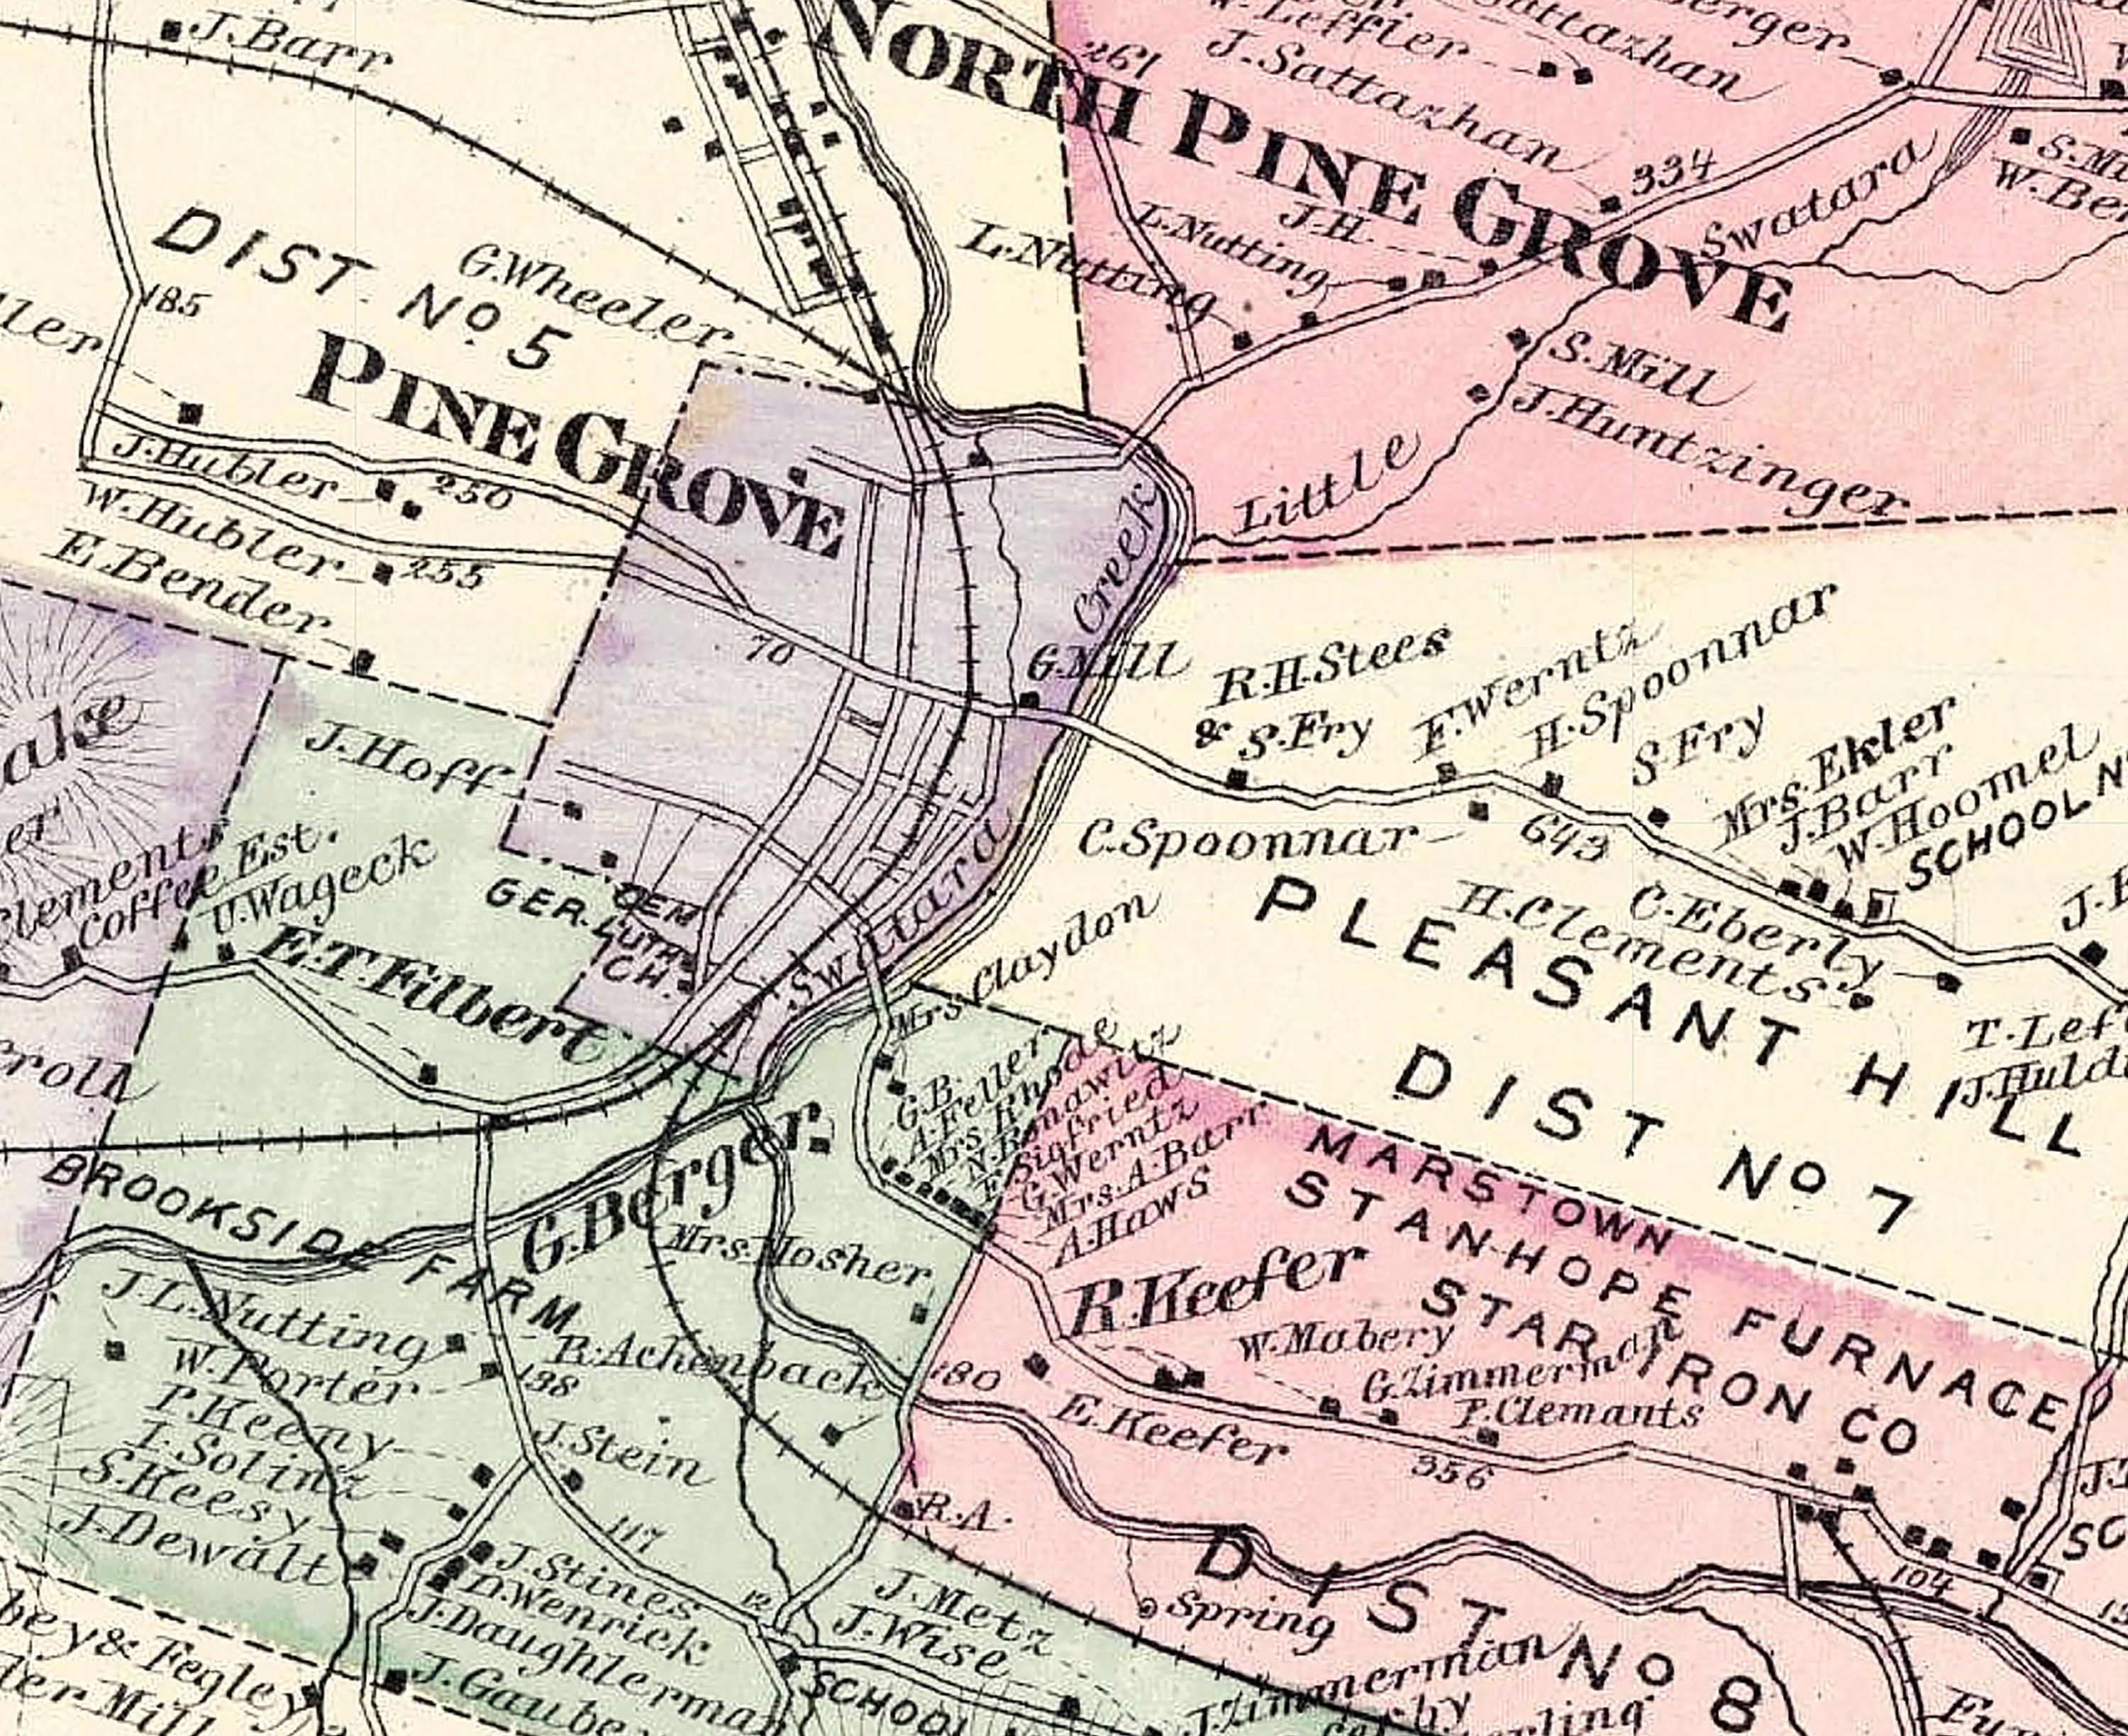 1875 Map of Pine Grove Township Schuylkill County Pennsylvania